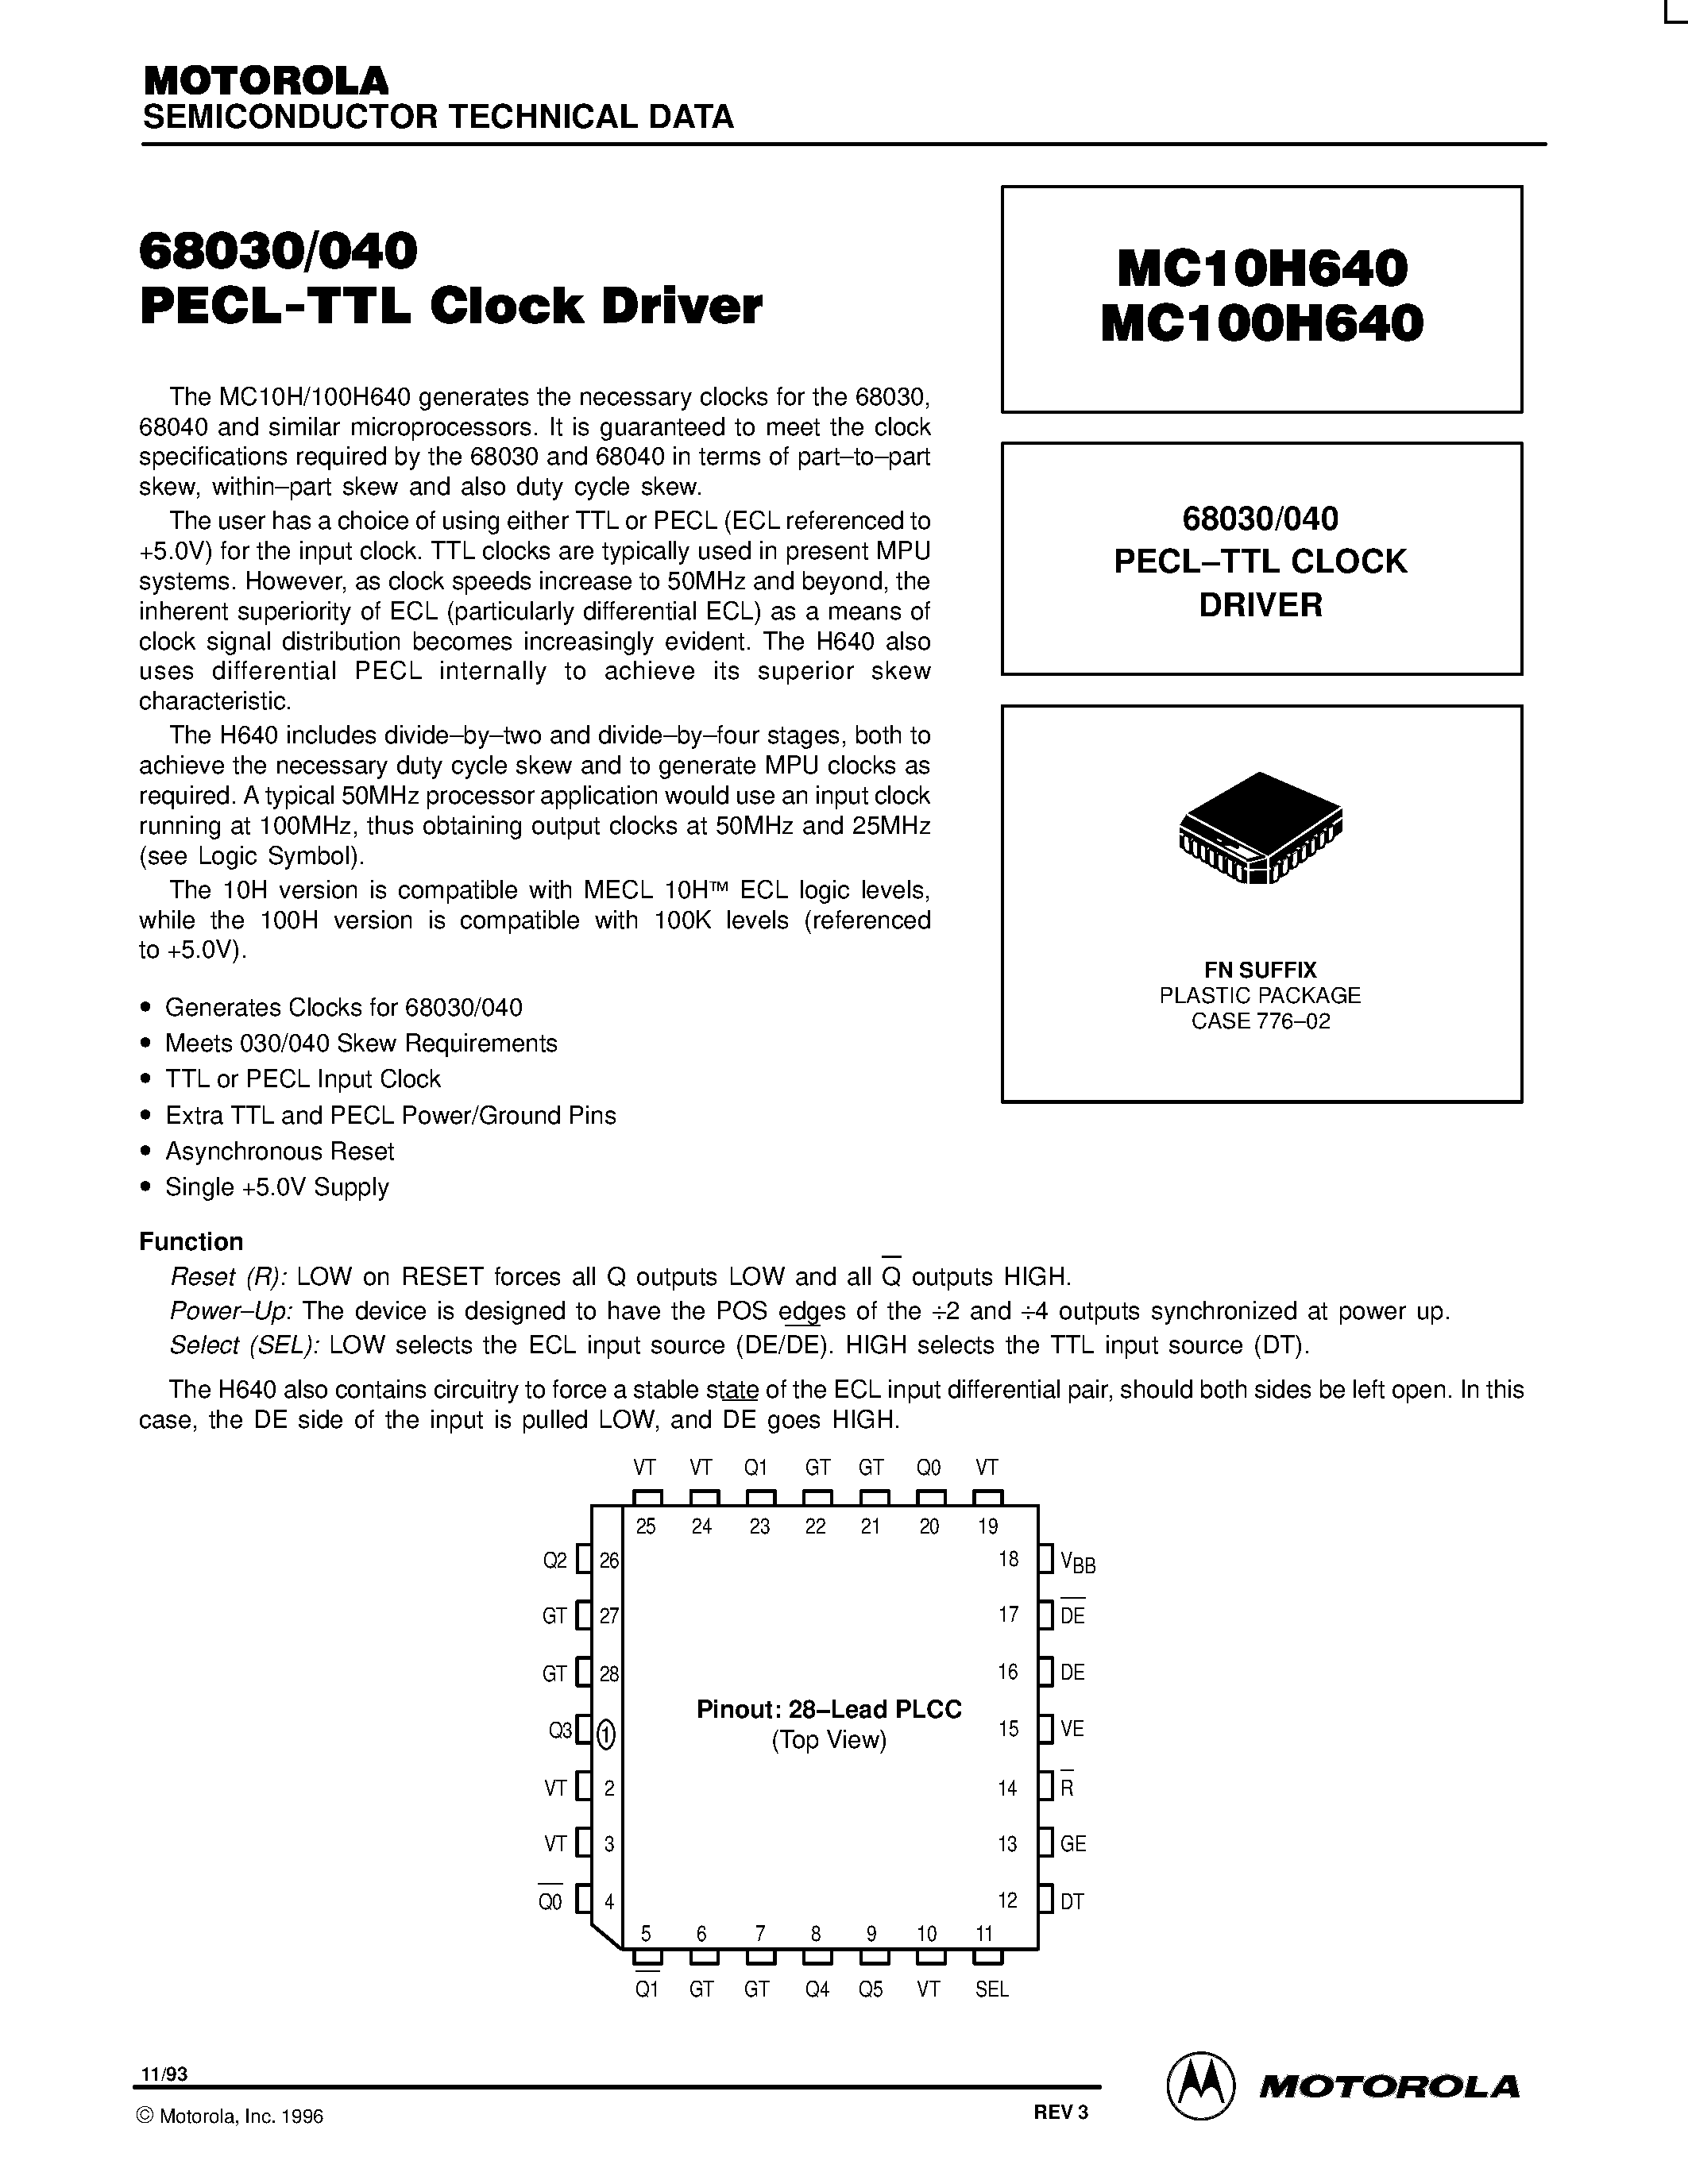 Datasheet MC10H640FN - 68030/040 PECL-TTL CLOCK DRIVER page 1